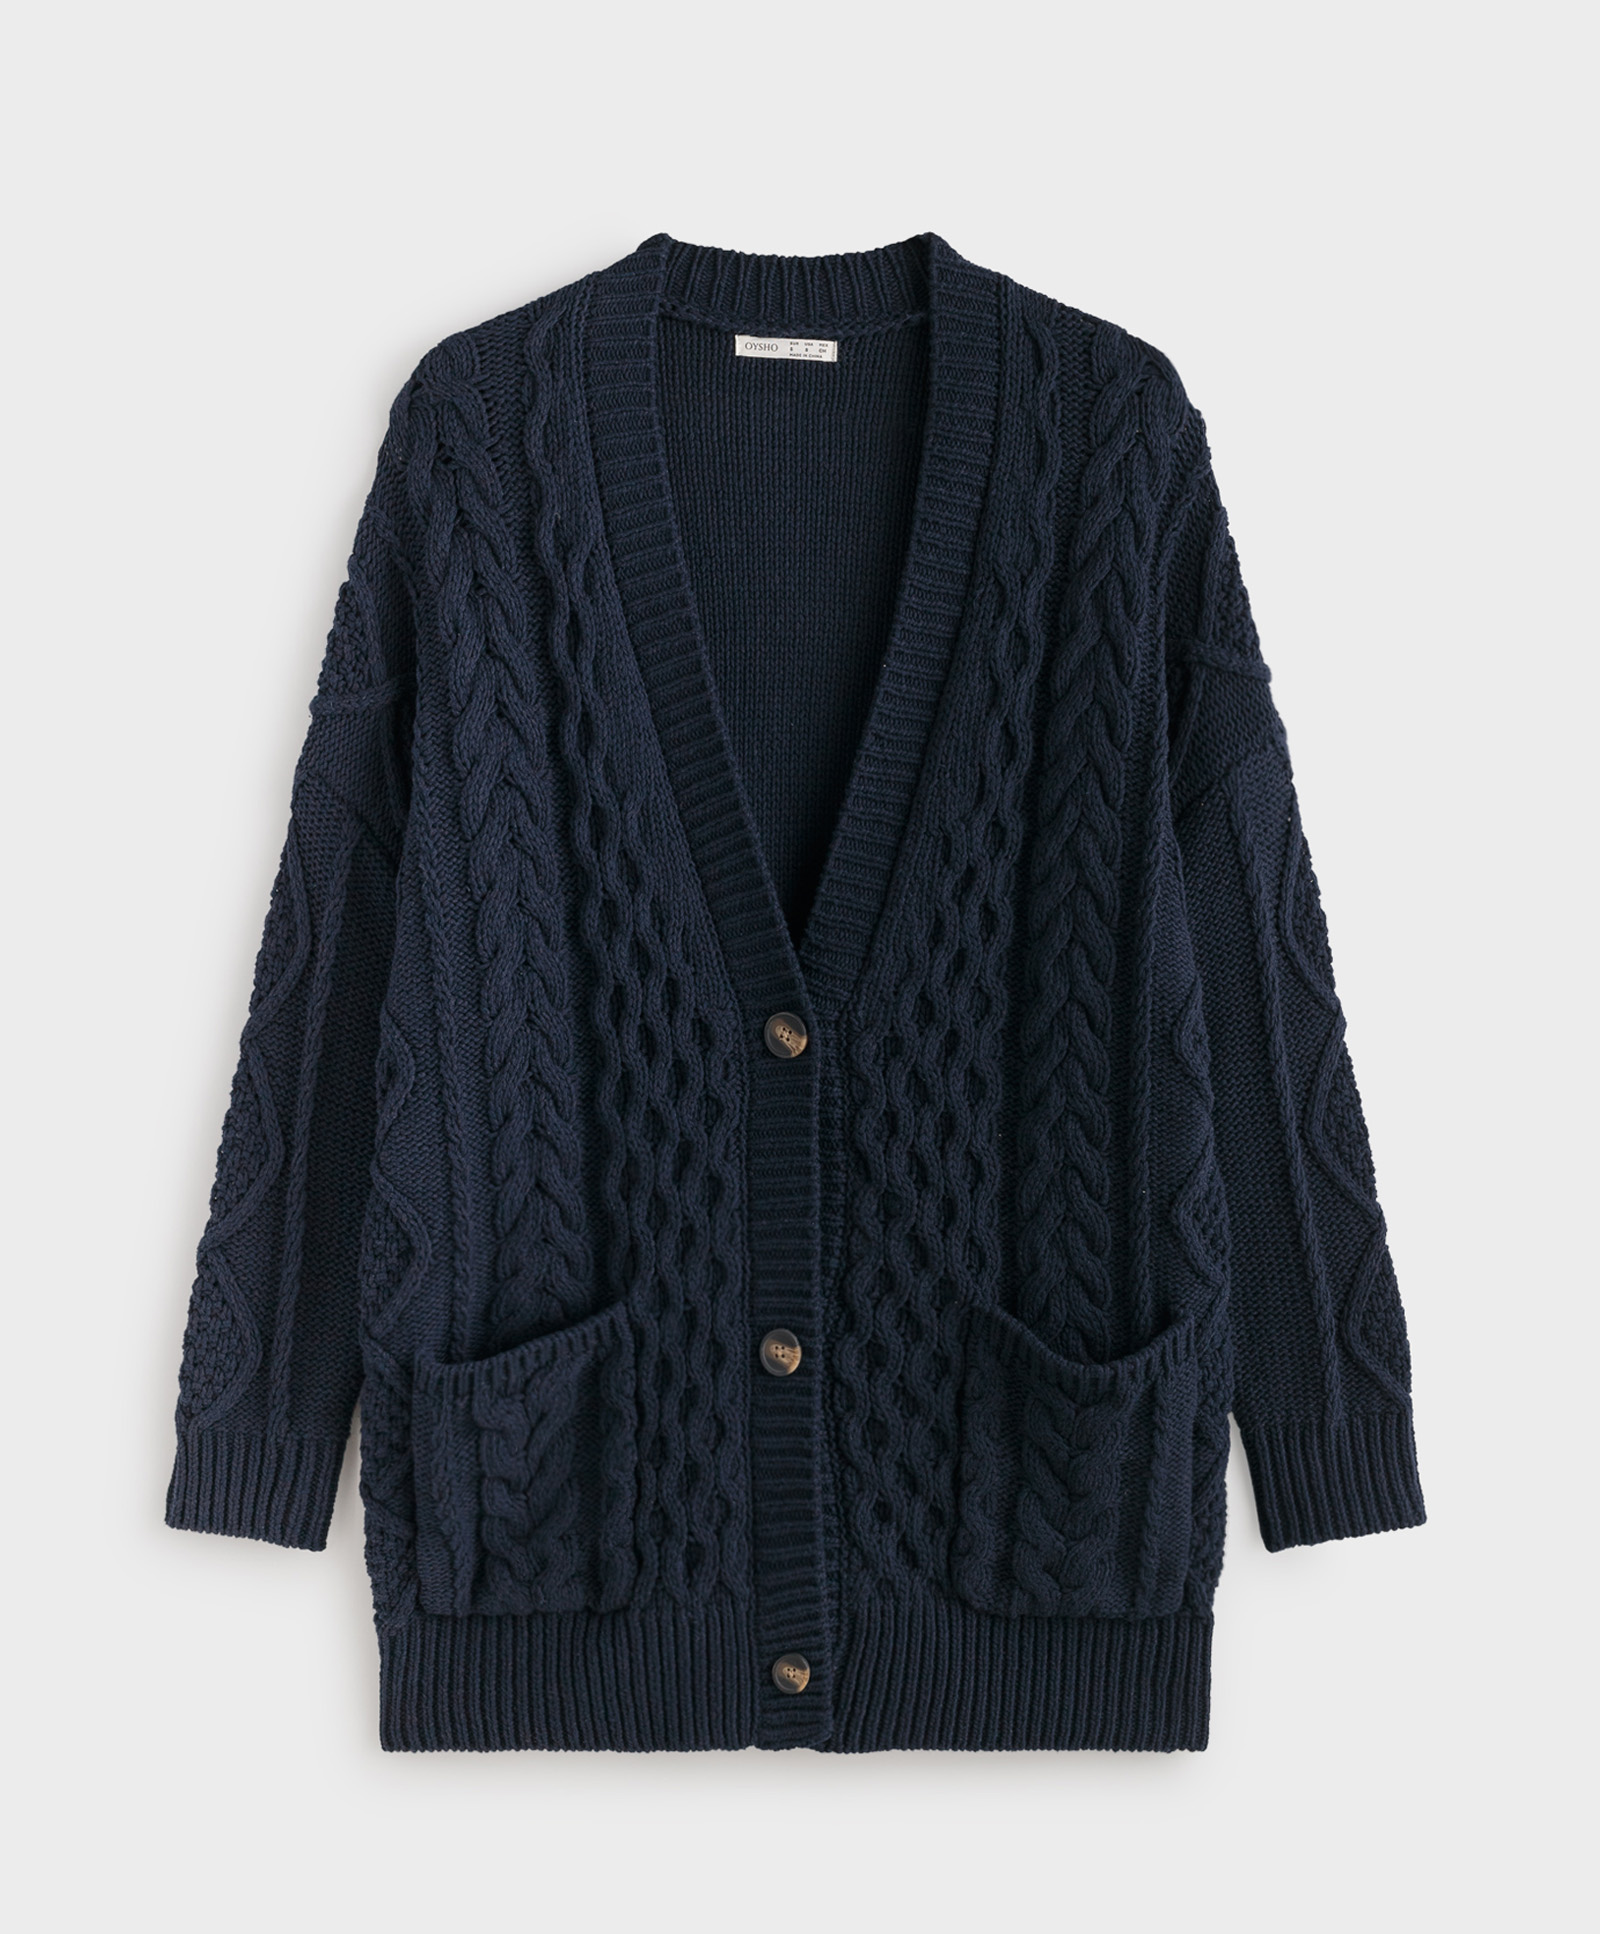 100% cotton knit jacket